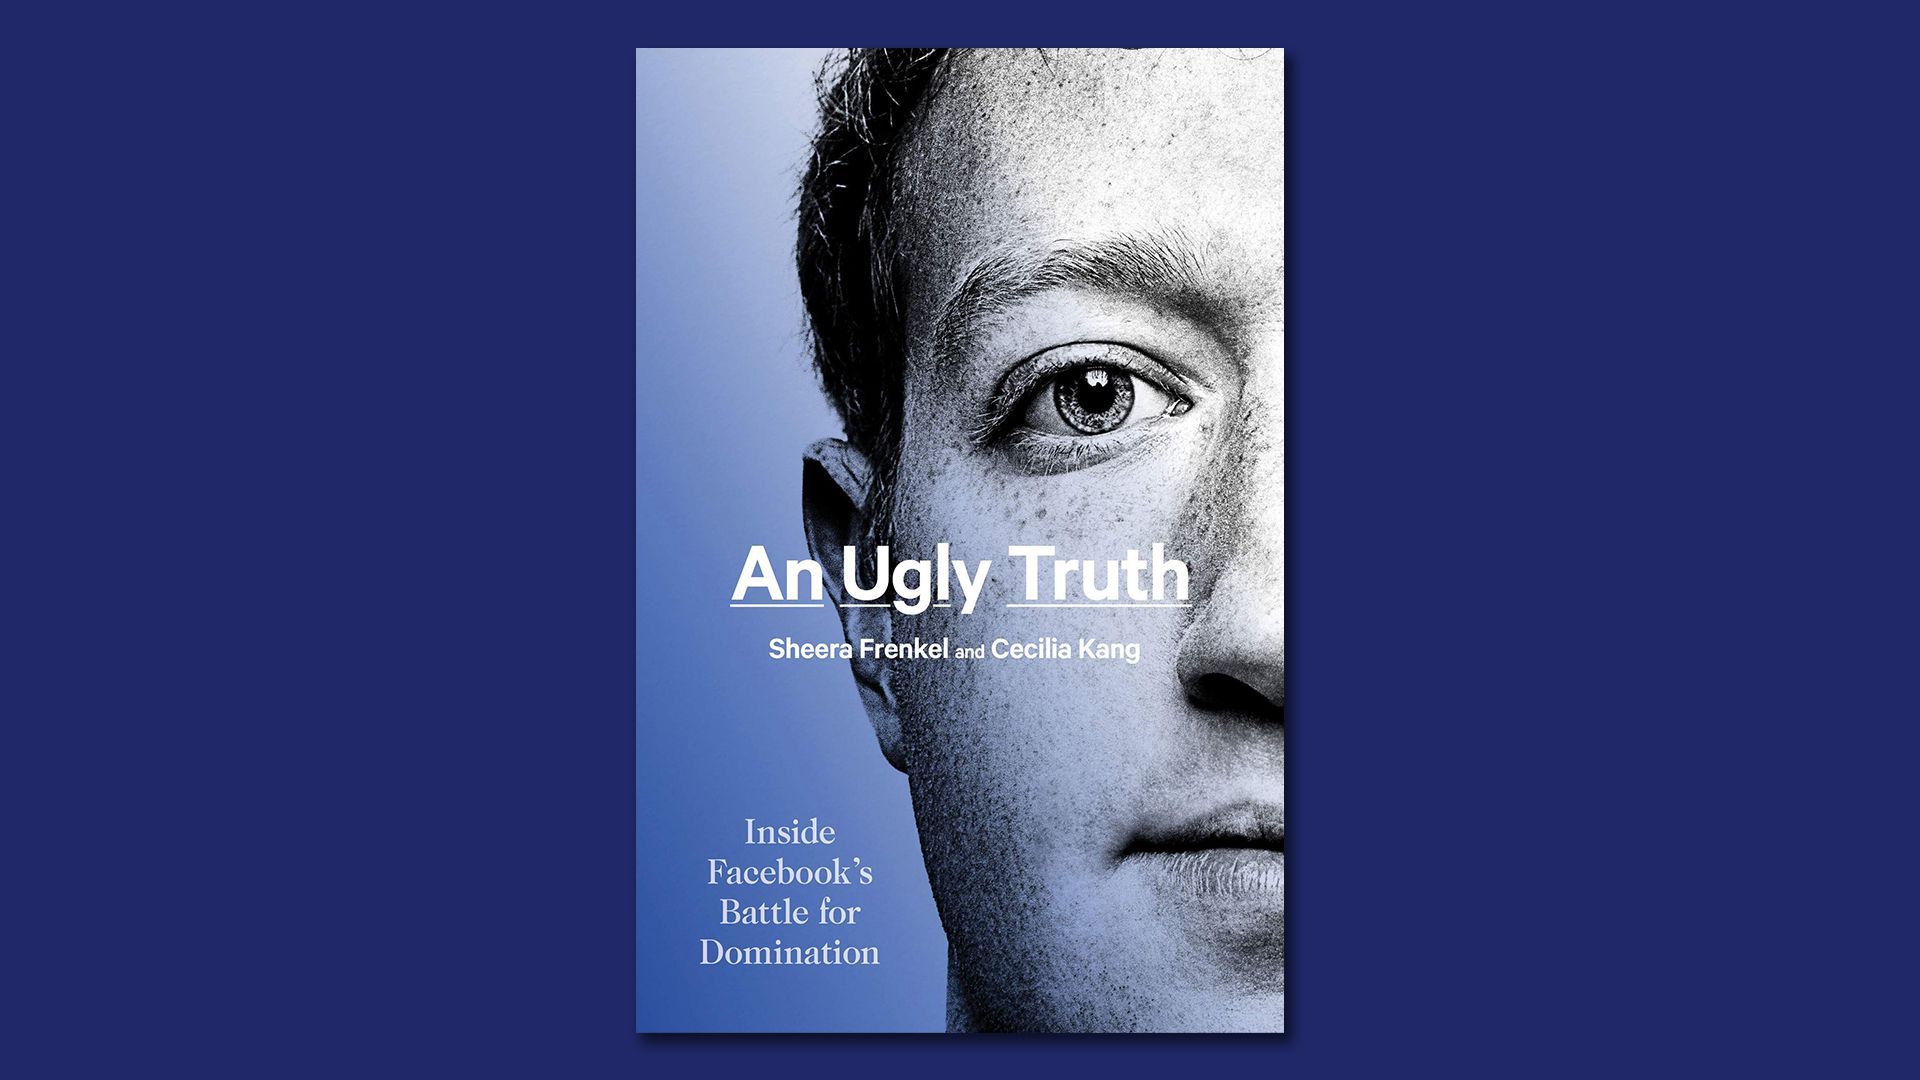 Mark Zuckerberg book cover